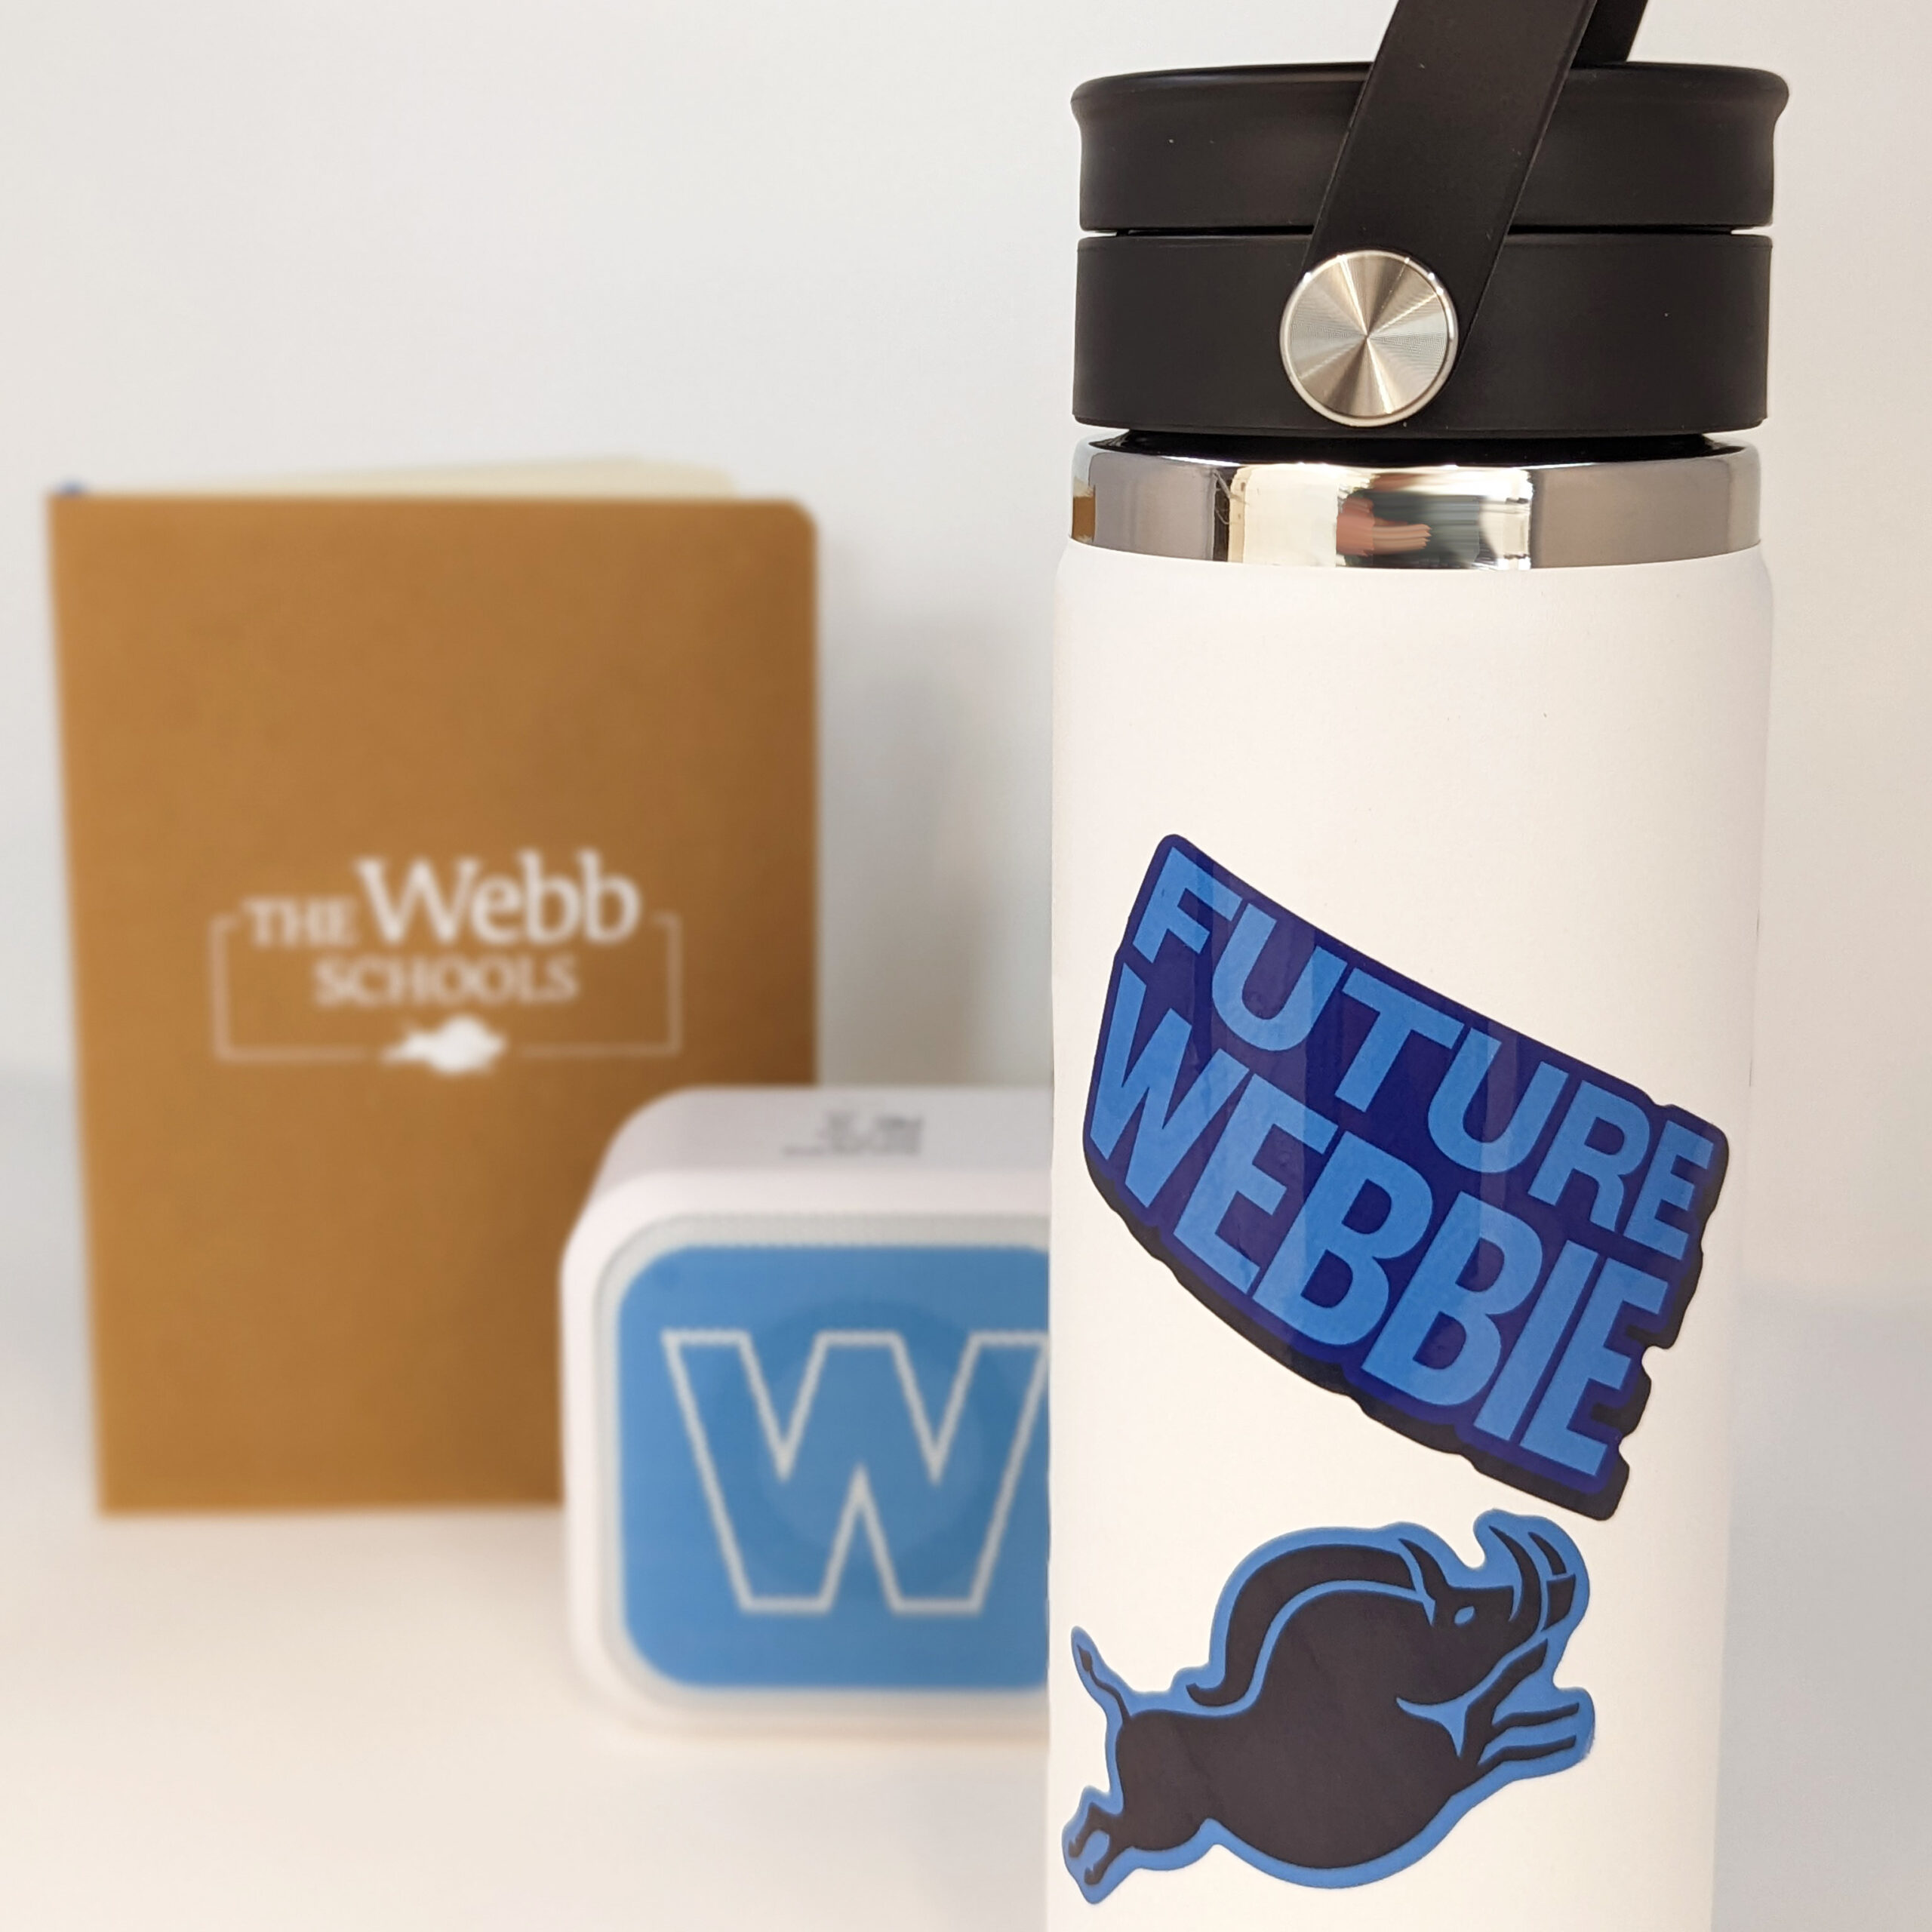 The Webb Schools brand identity designed by Kilter